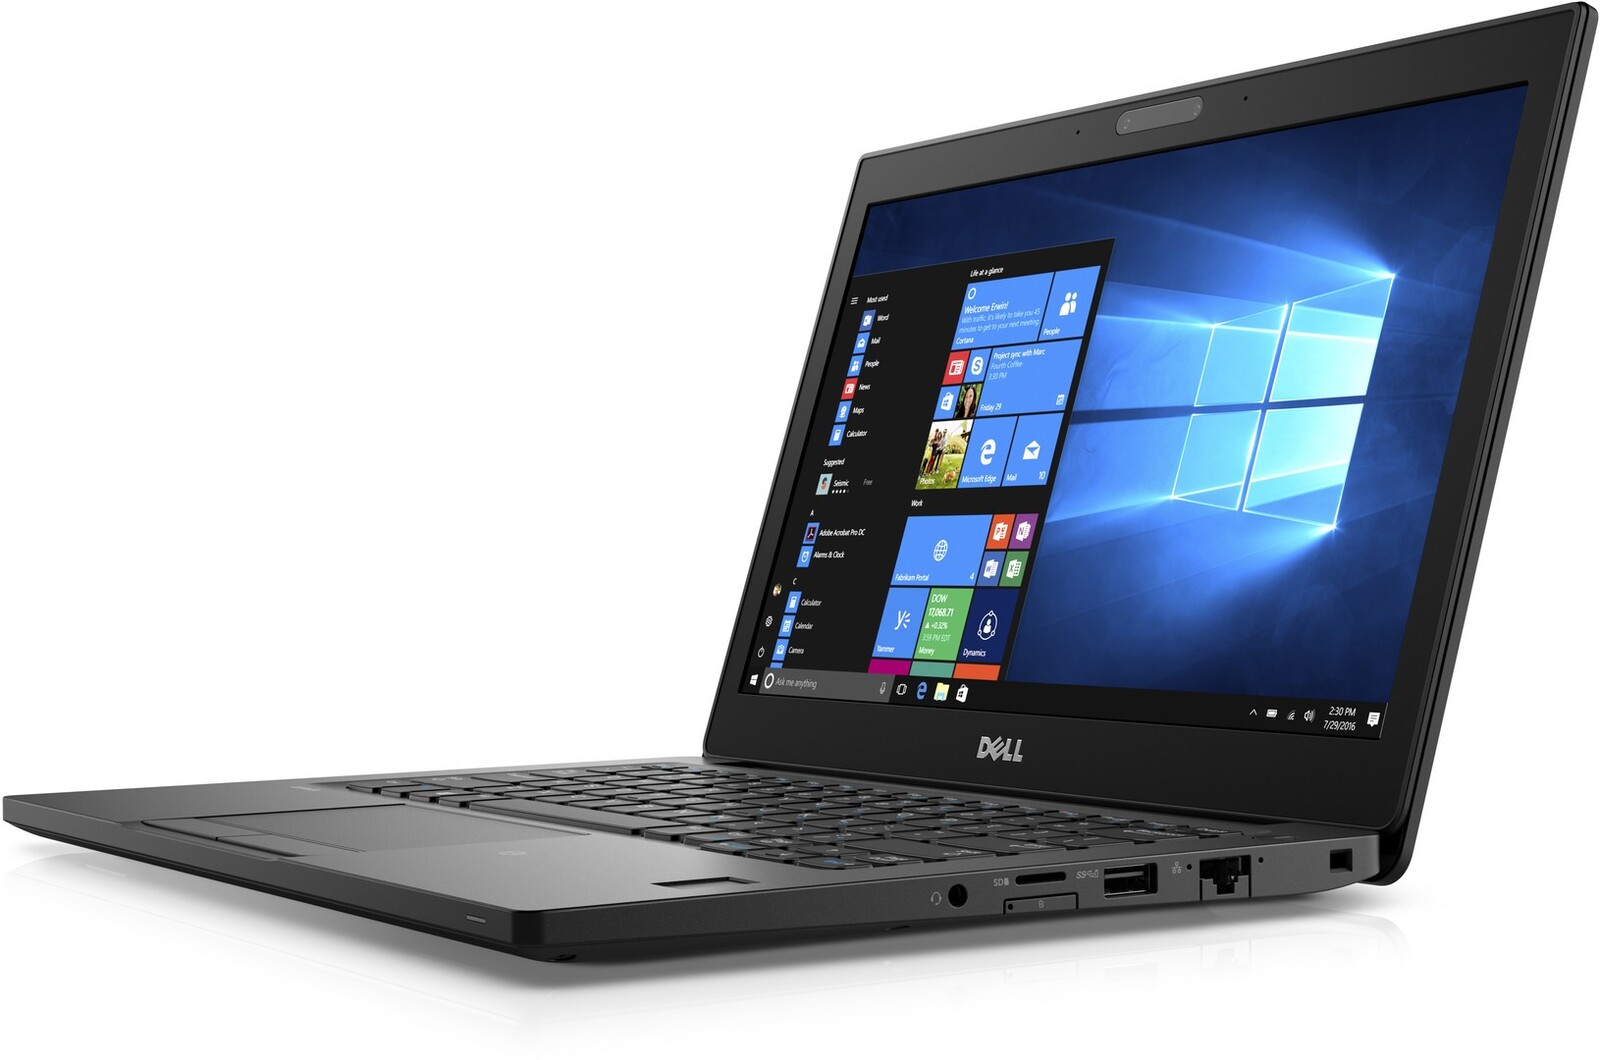 Dell Latitude 7280 Ultrabook i5 7300u 2.60Ghz 8GB RAM 128GB SSD Windows 10 12.5"  - B Grade Image 2